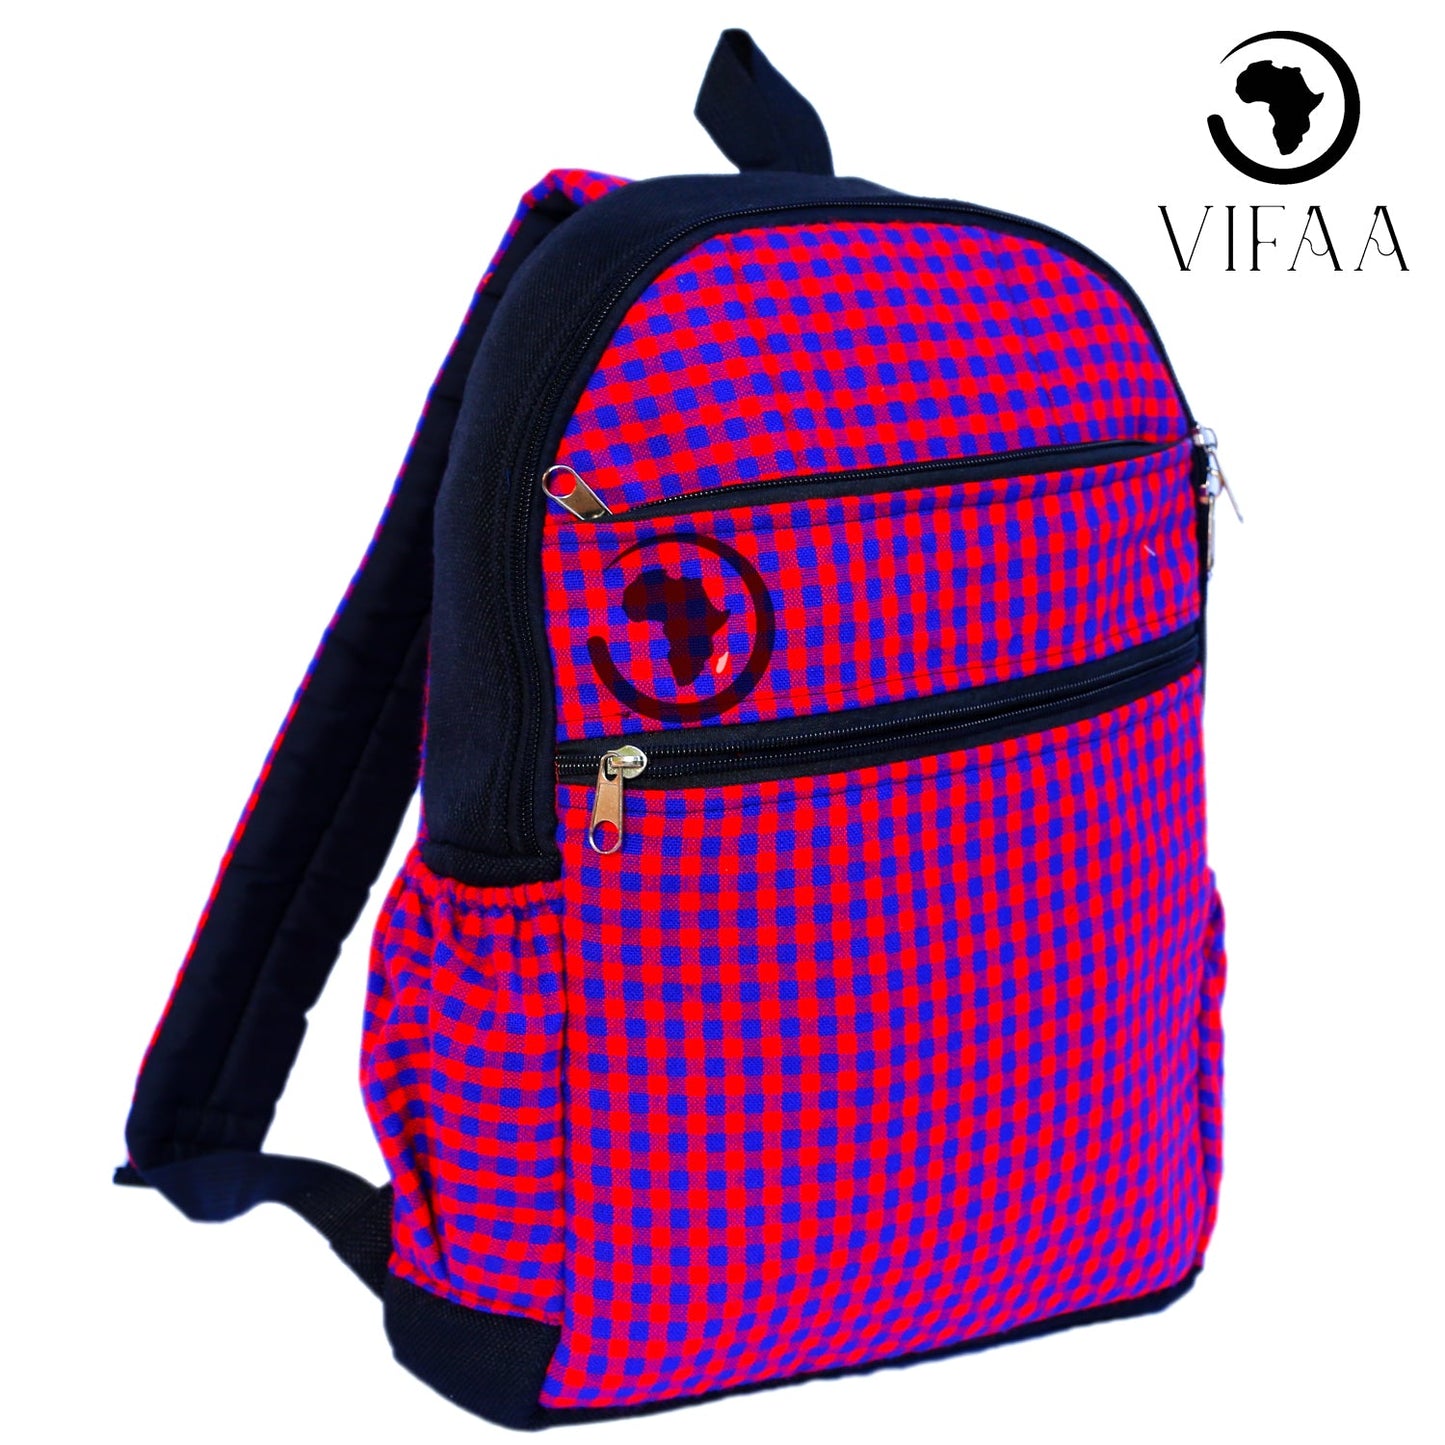 Masai Backpack - Medium Plus 2